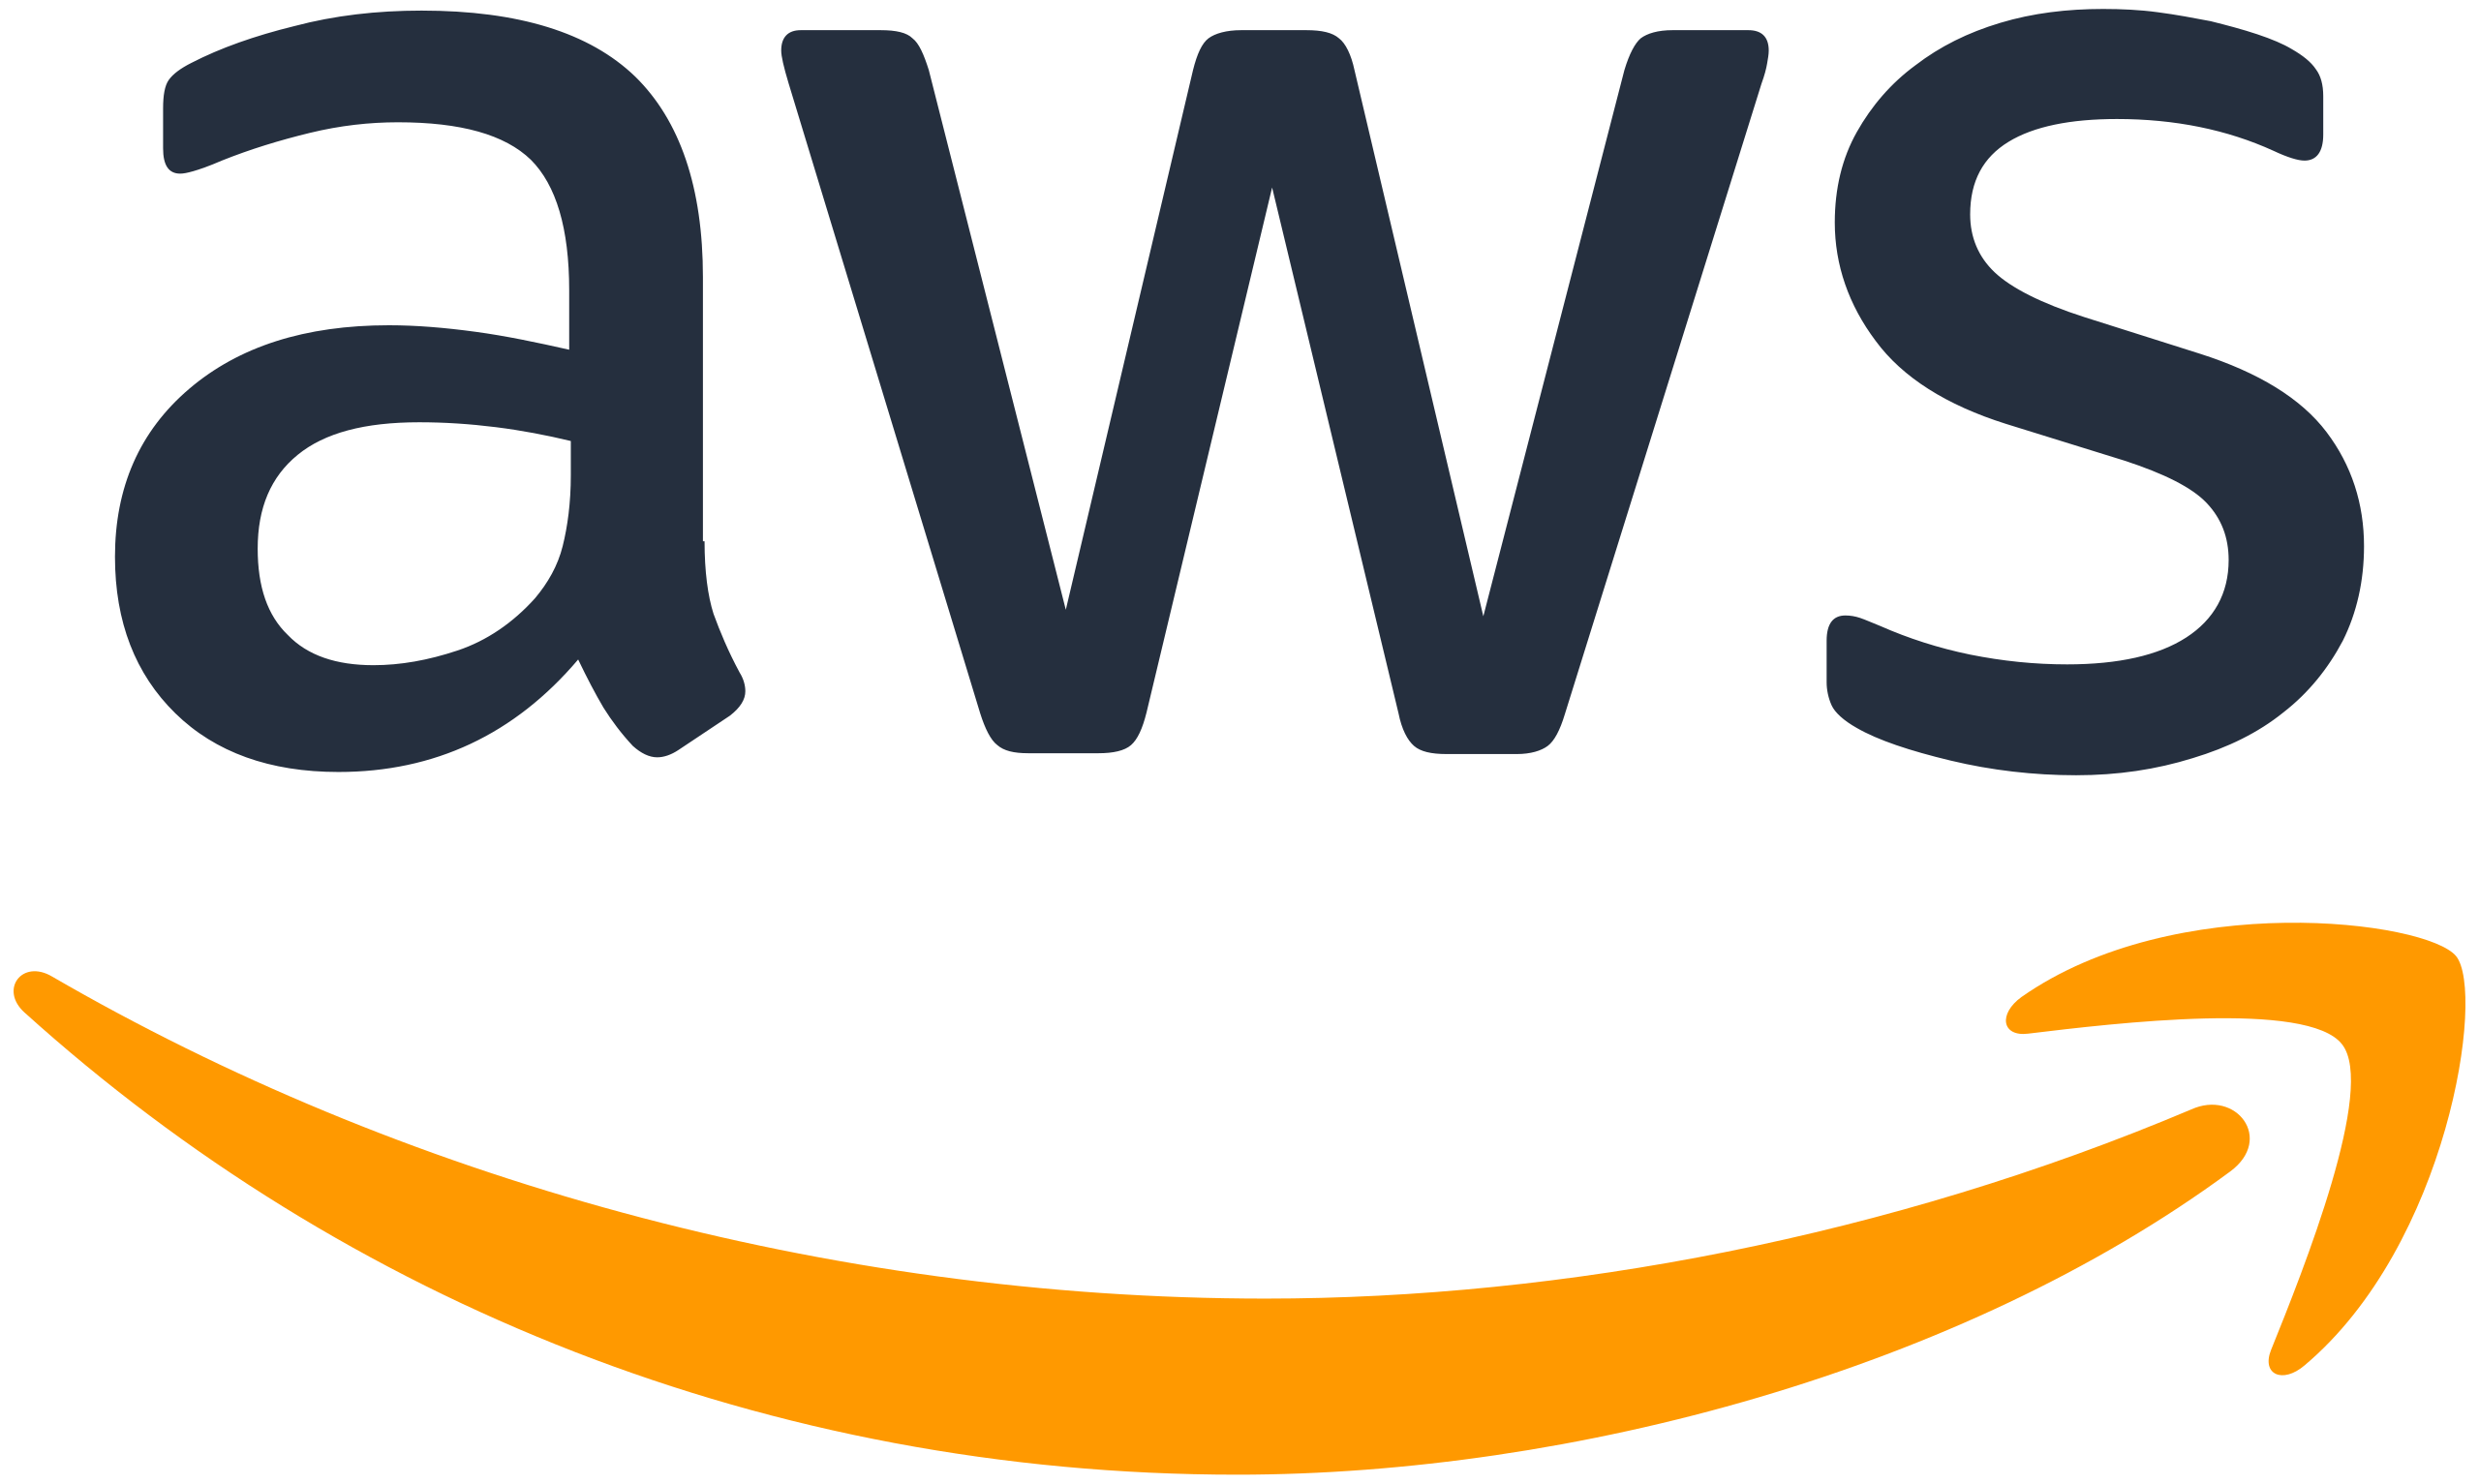 amazonwebservices logo